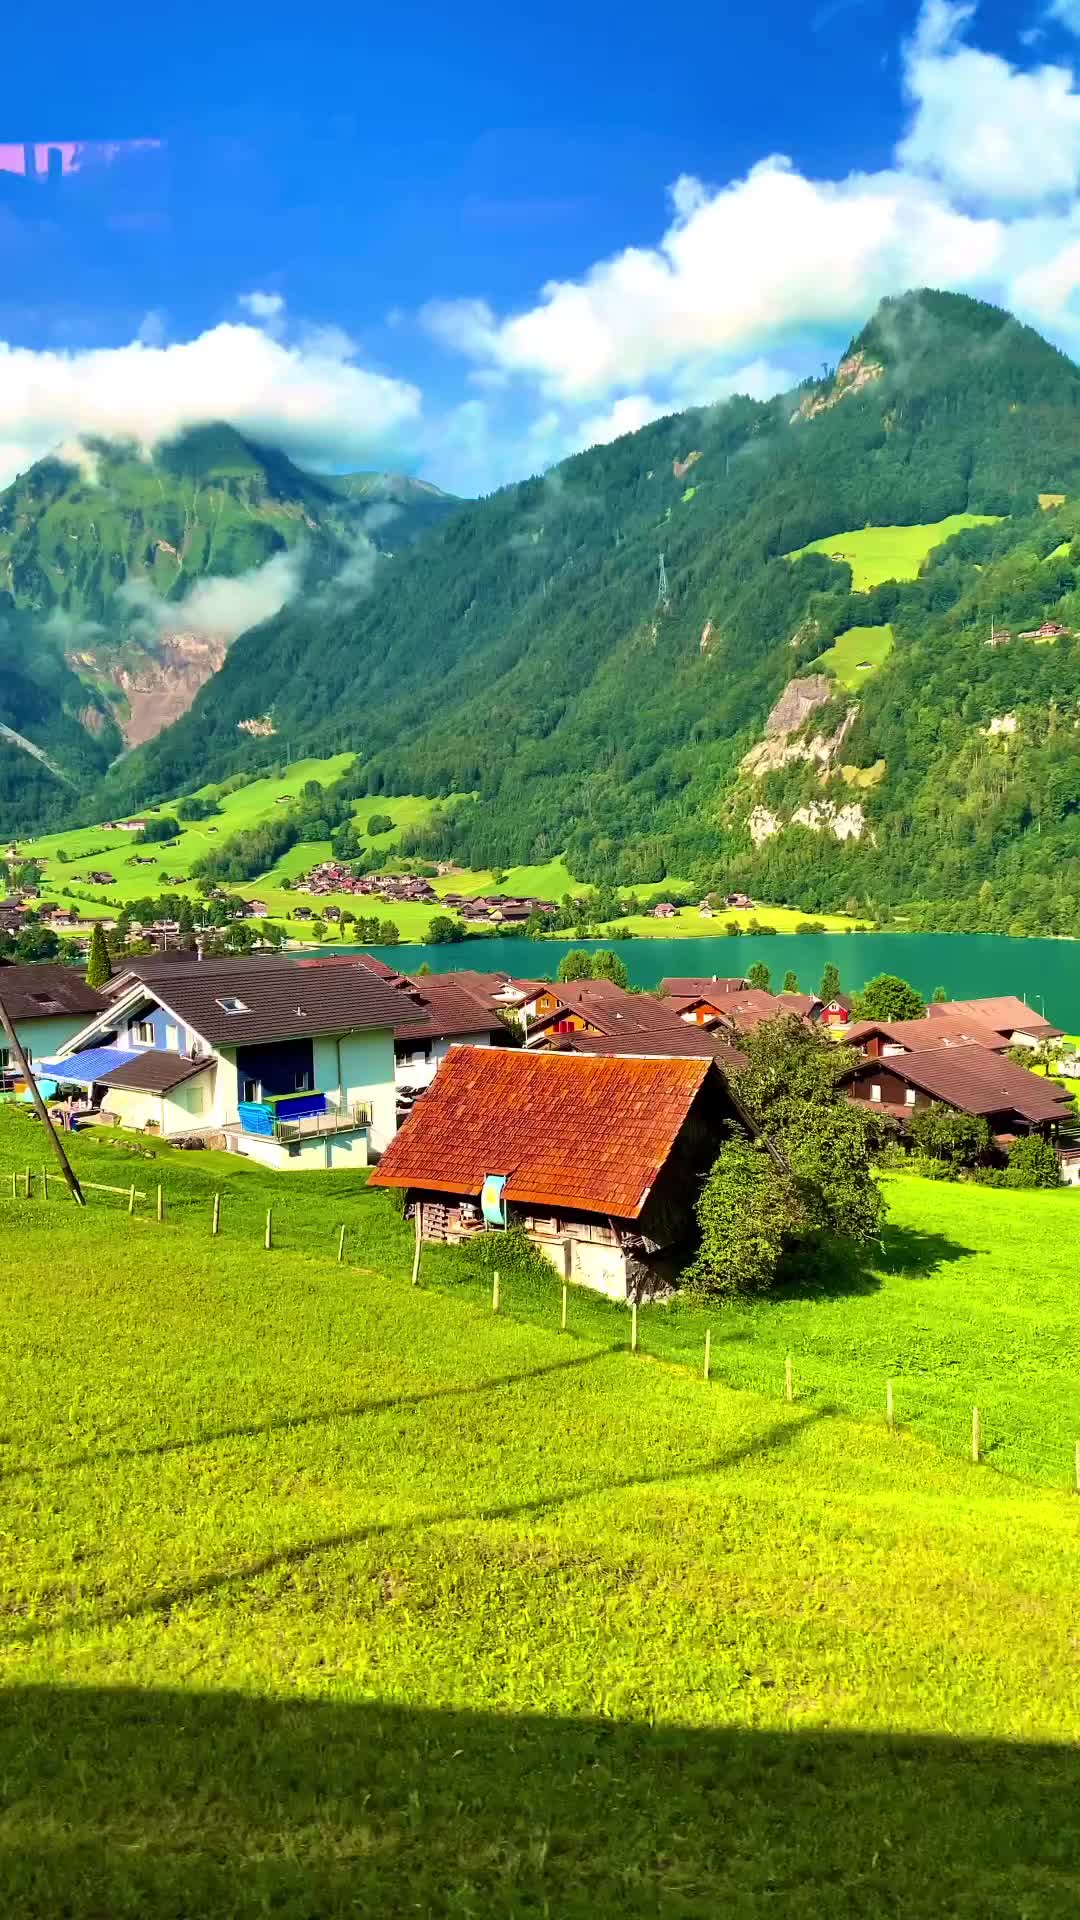 9 Must-Visit Swiss Alps Destinations for Stunning Views